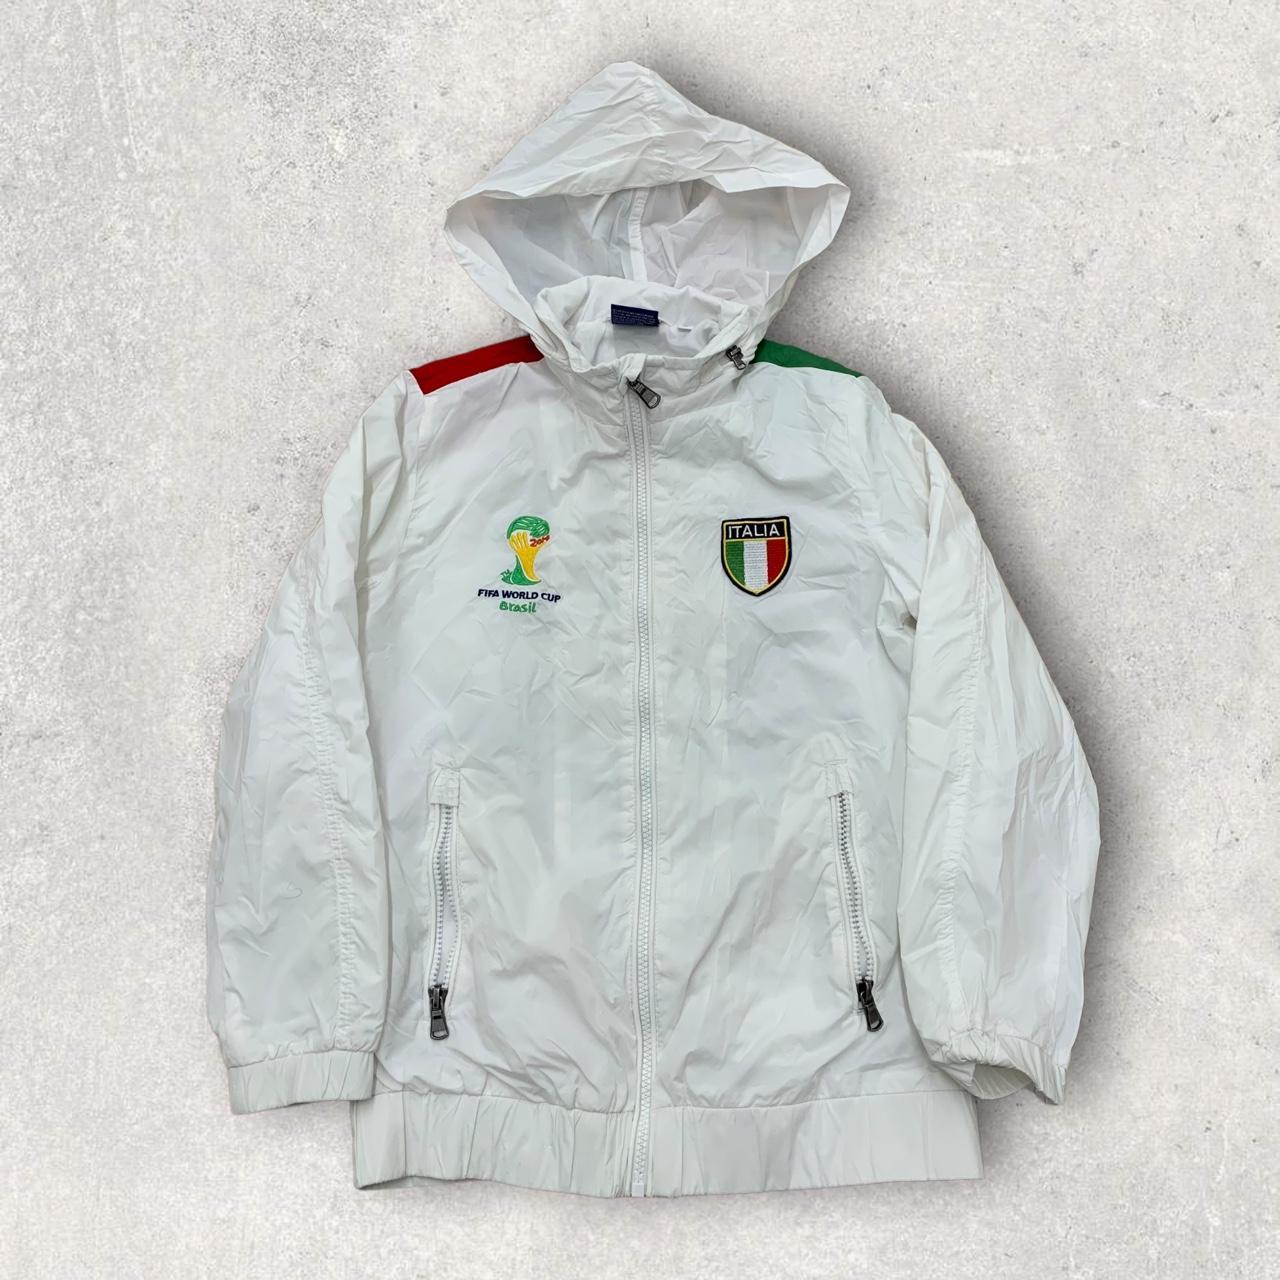 Italia 2014 FIFA World Cup Brazil jacket in white.... - Depop